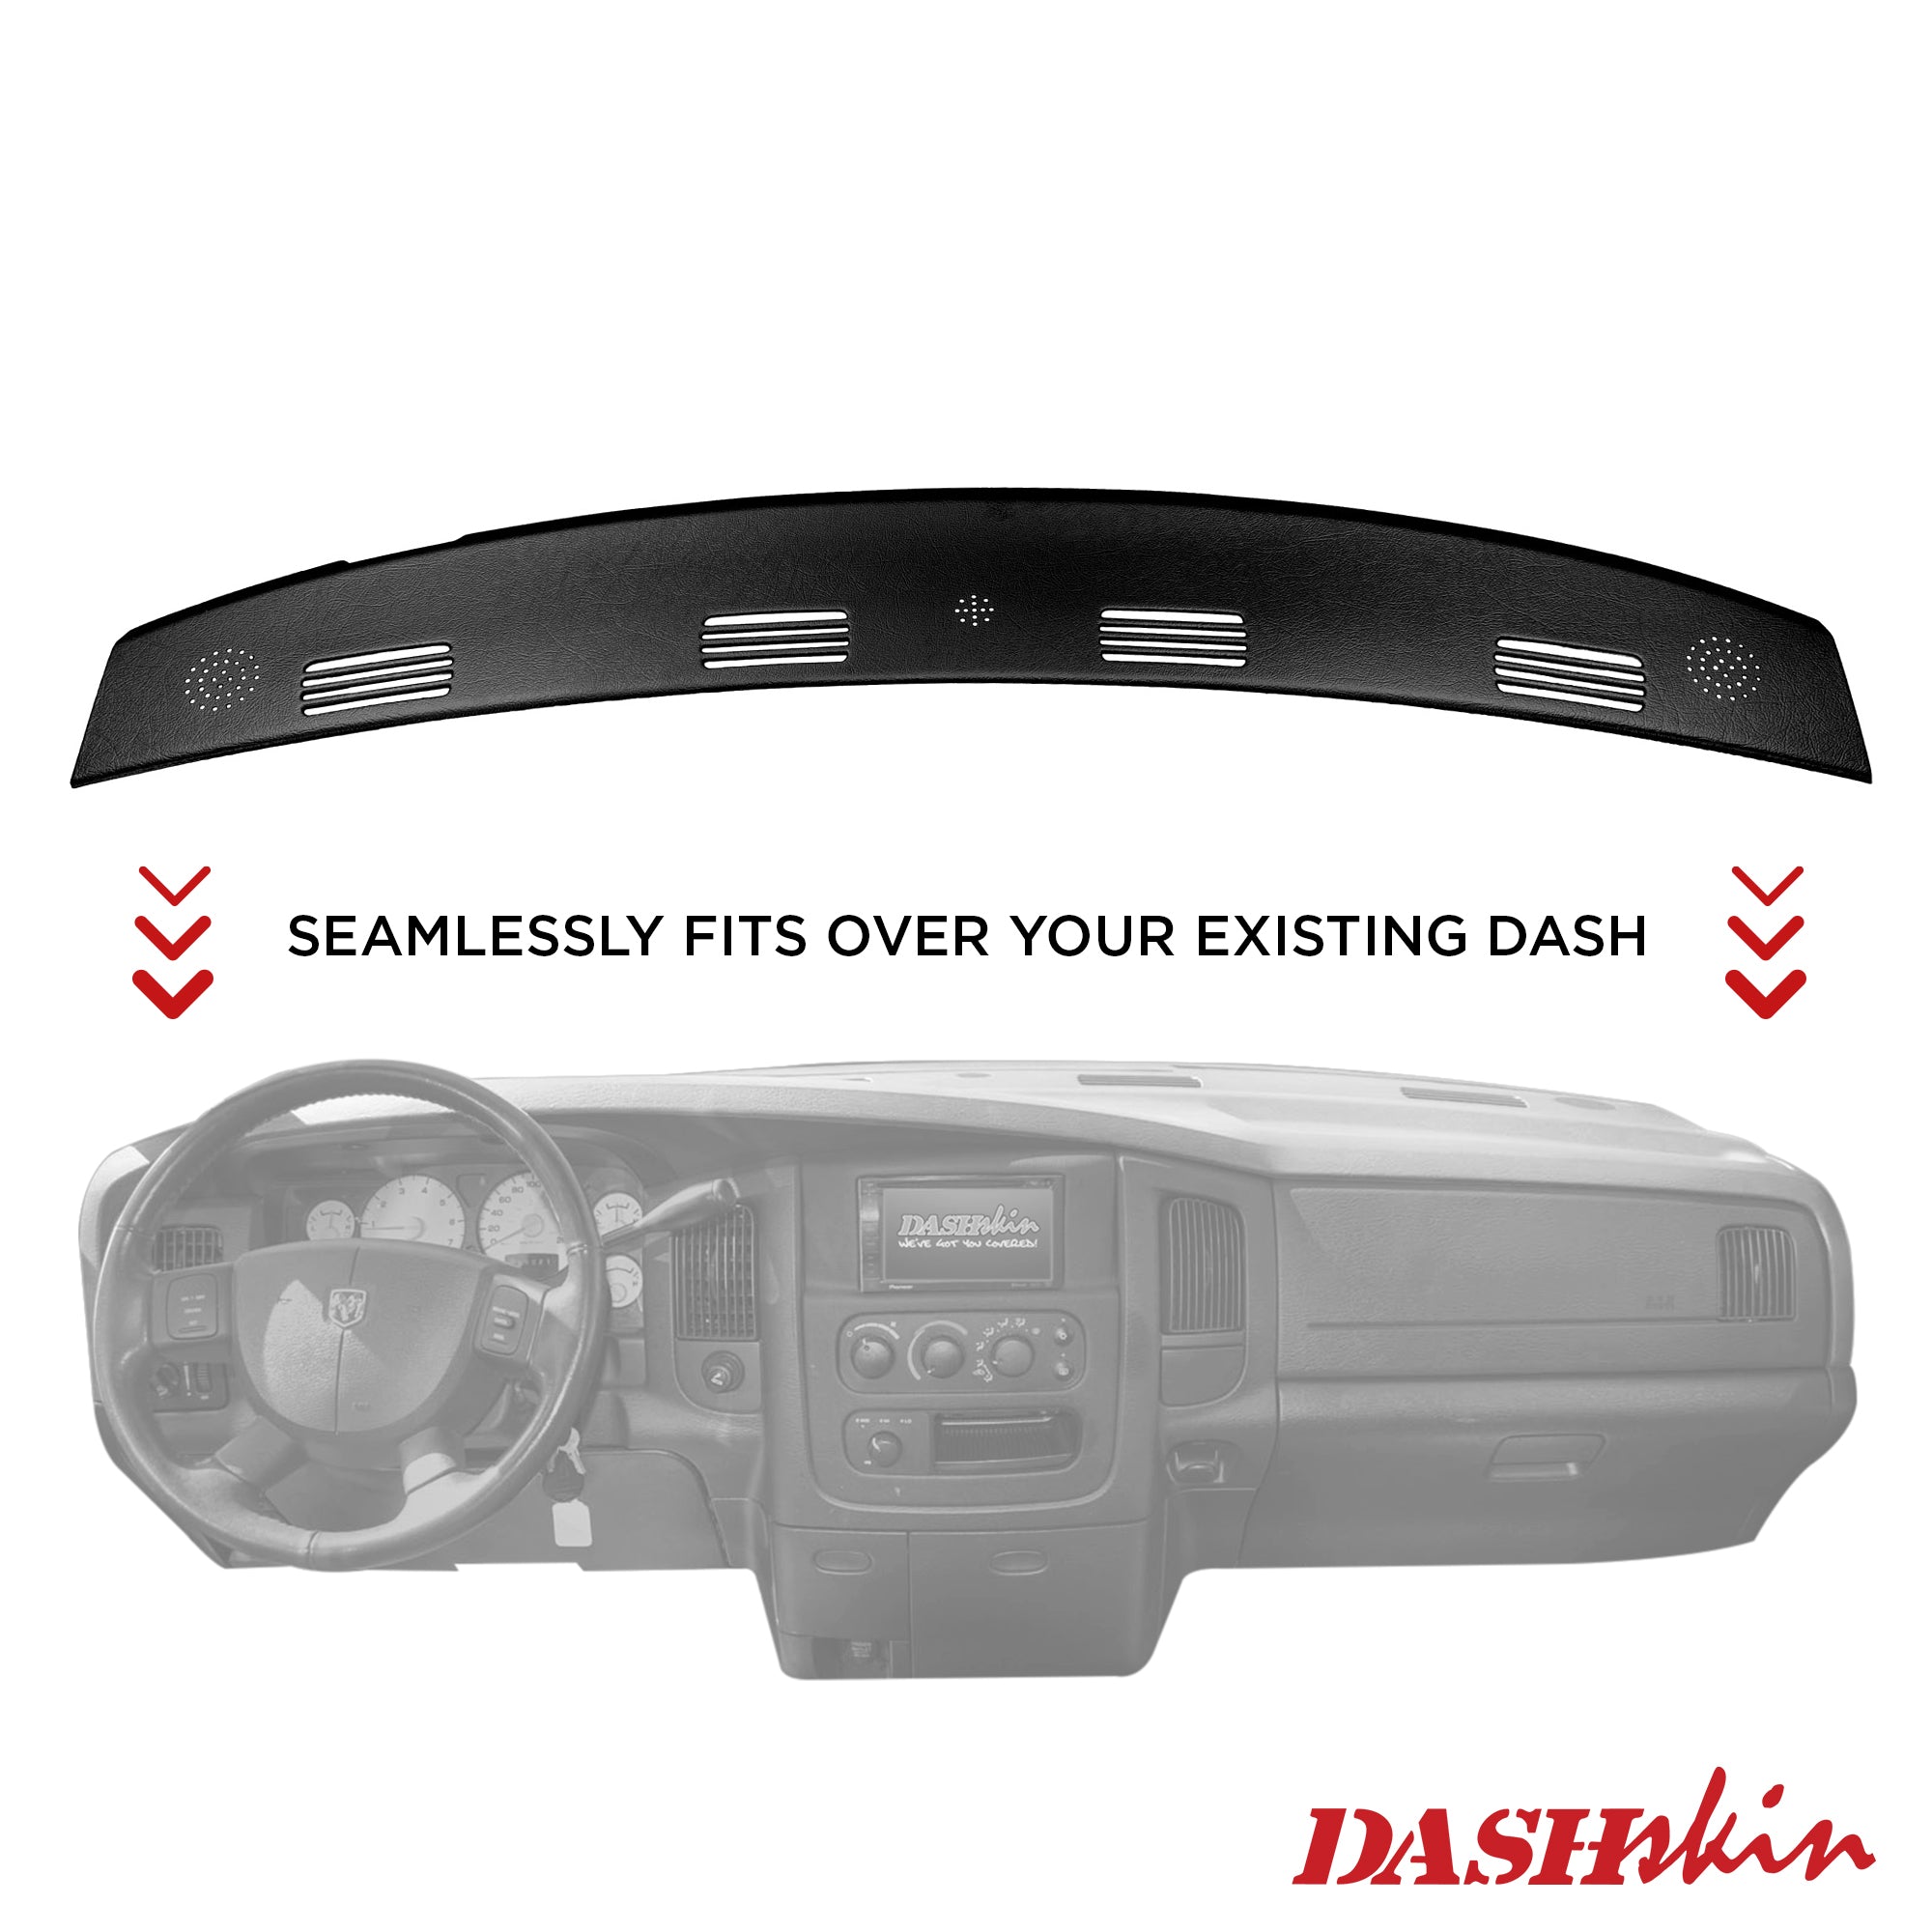 DashSkin dashboard covers for Dodge vehicles